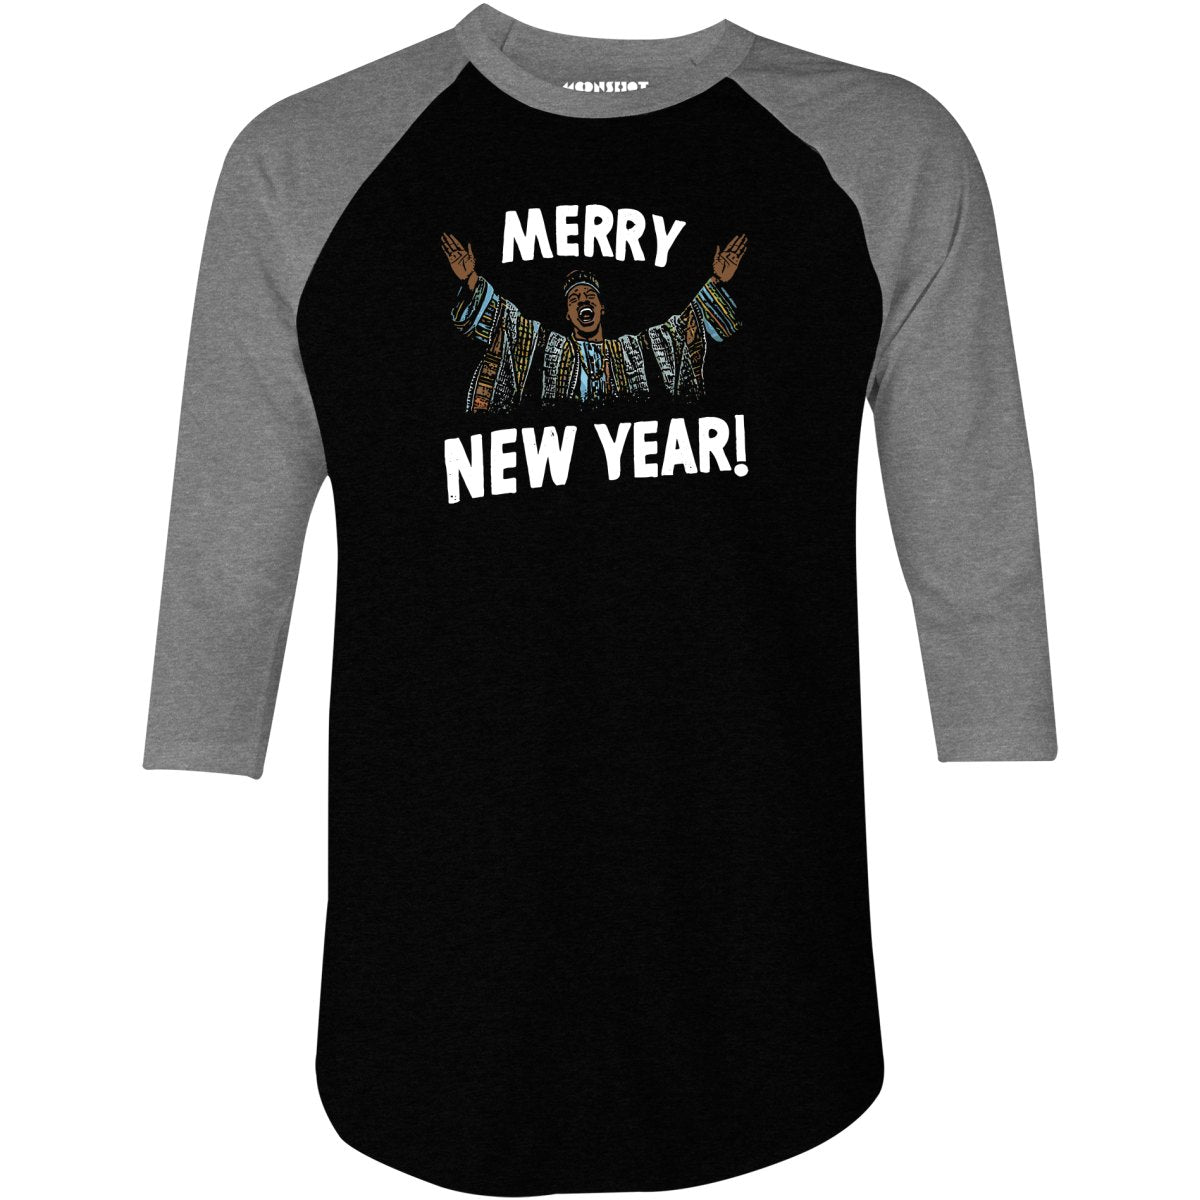 Merry New Year! - 3/4 Sleeve Raglan T-Shirt